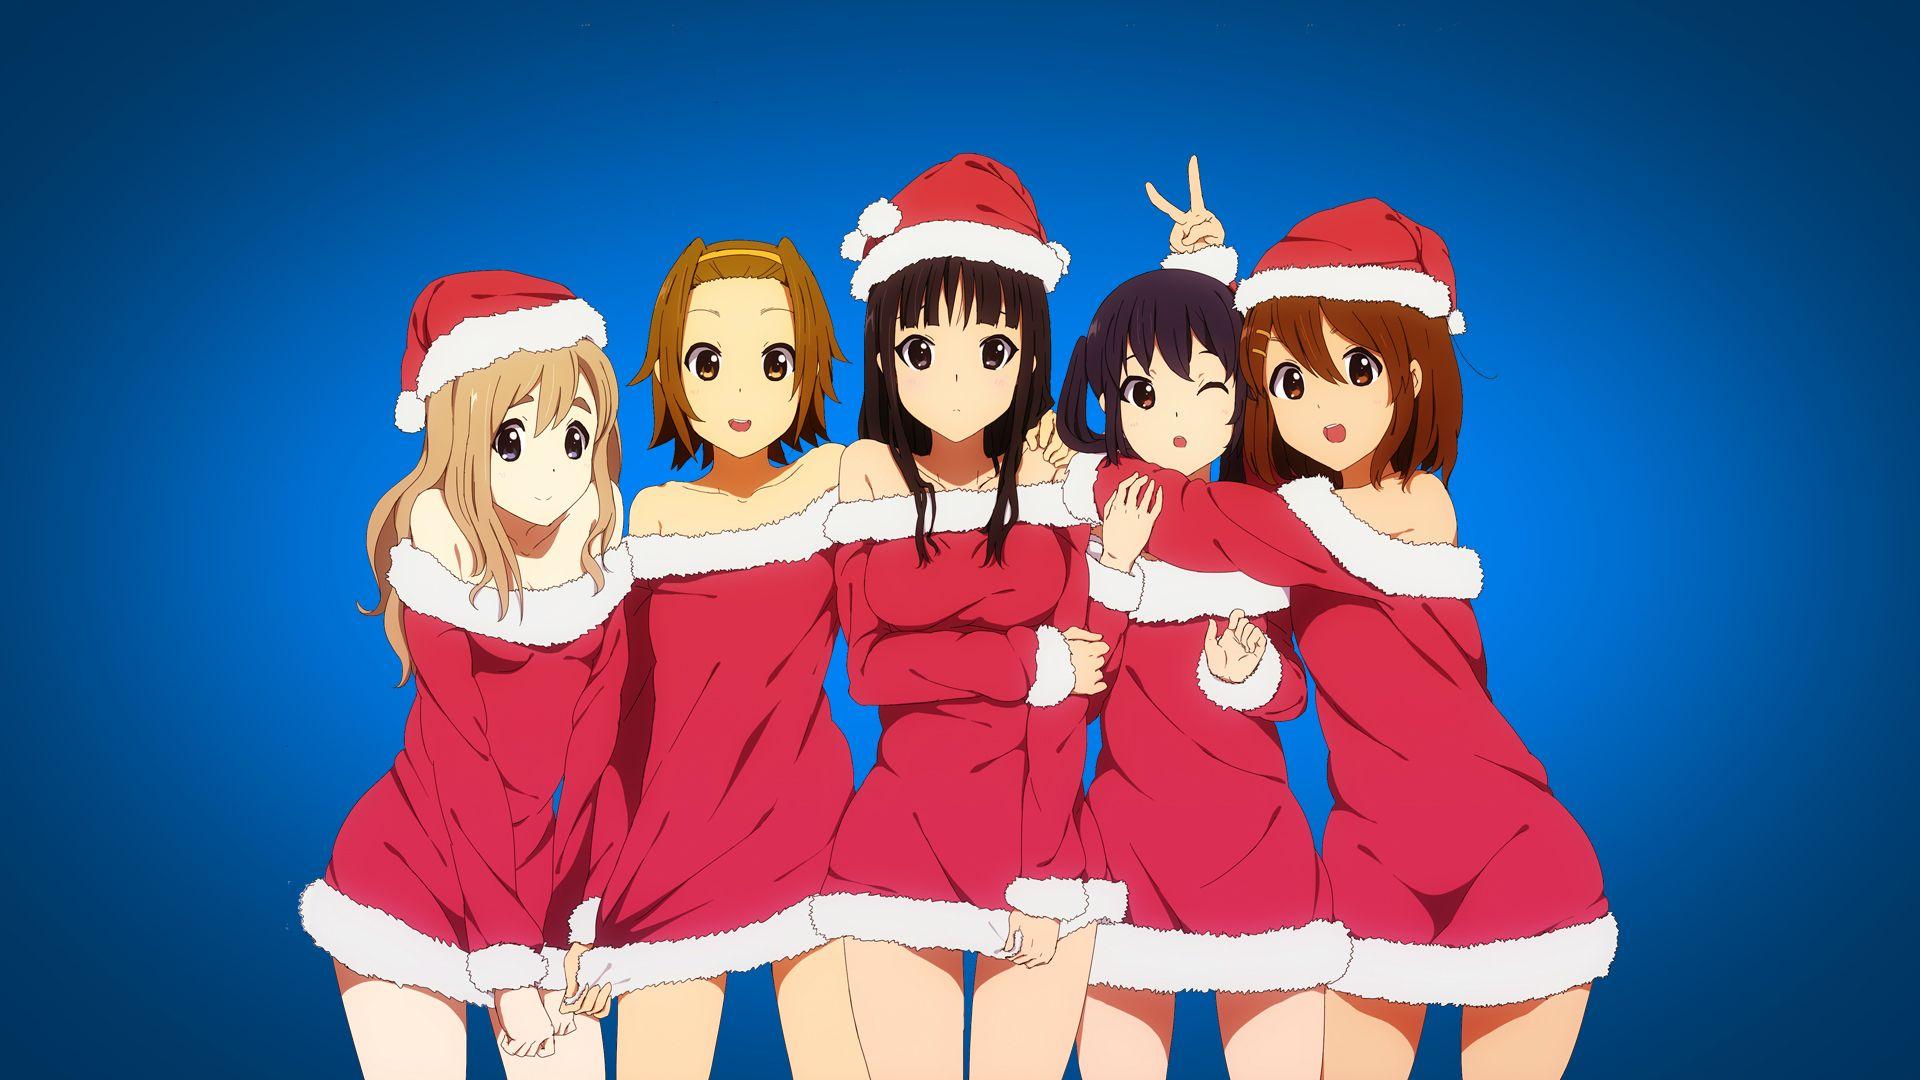 Anime Christmas Background Factory Sale - www.illva.com 1694091323